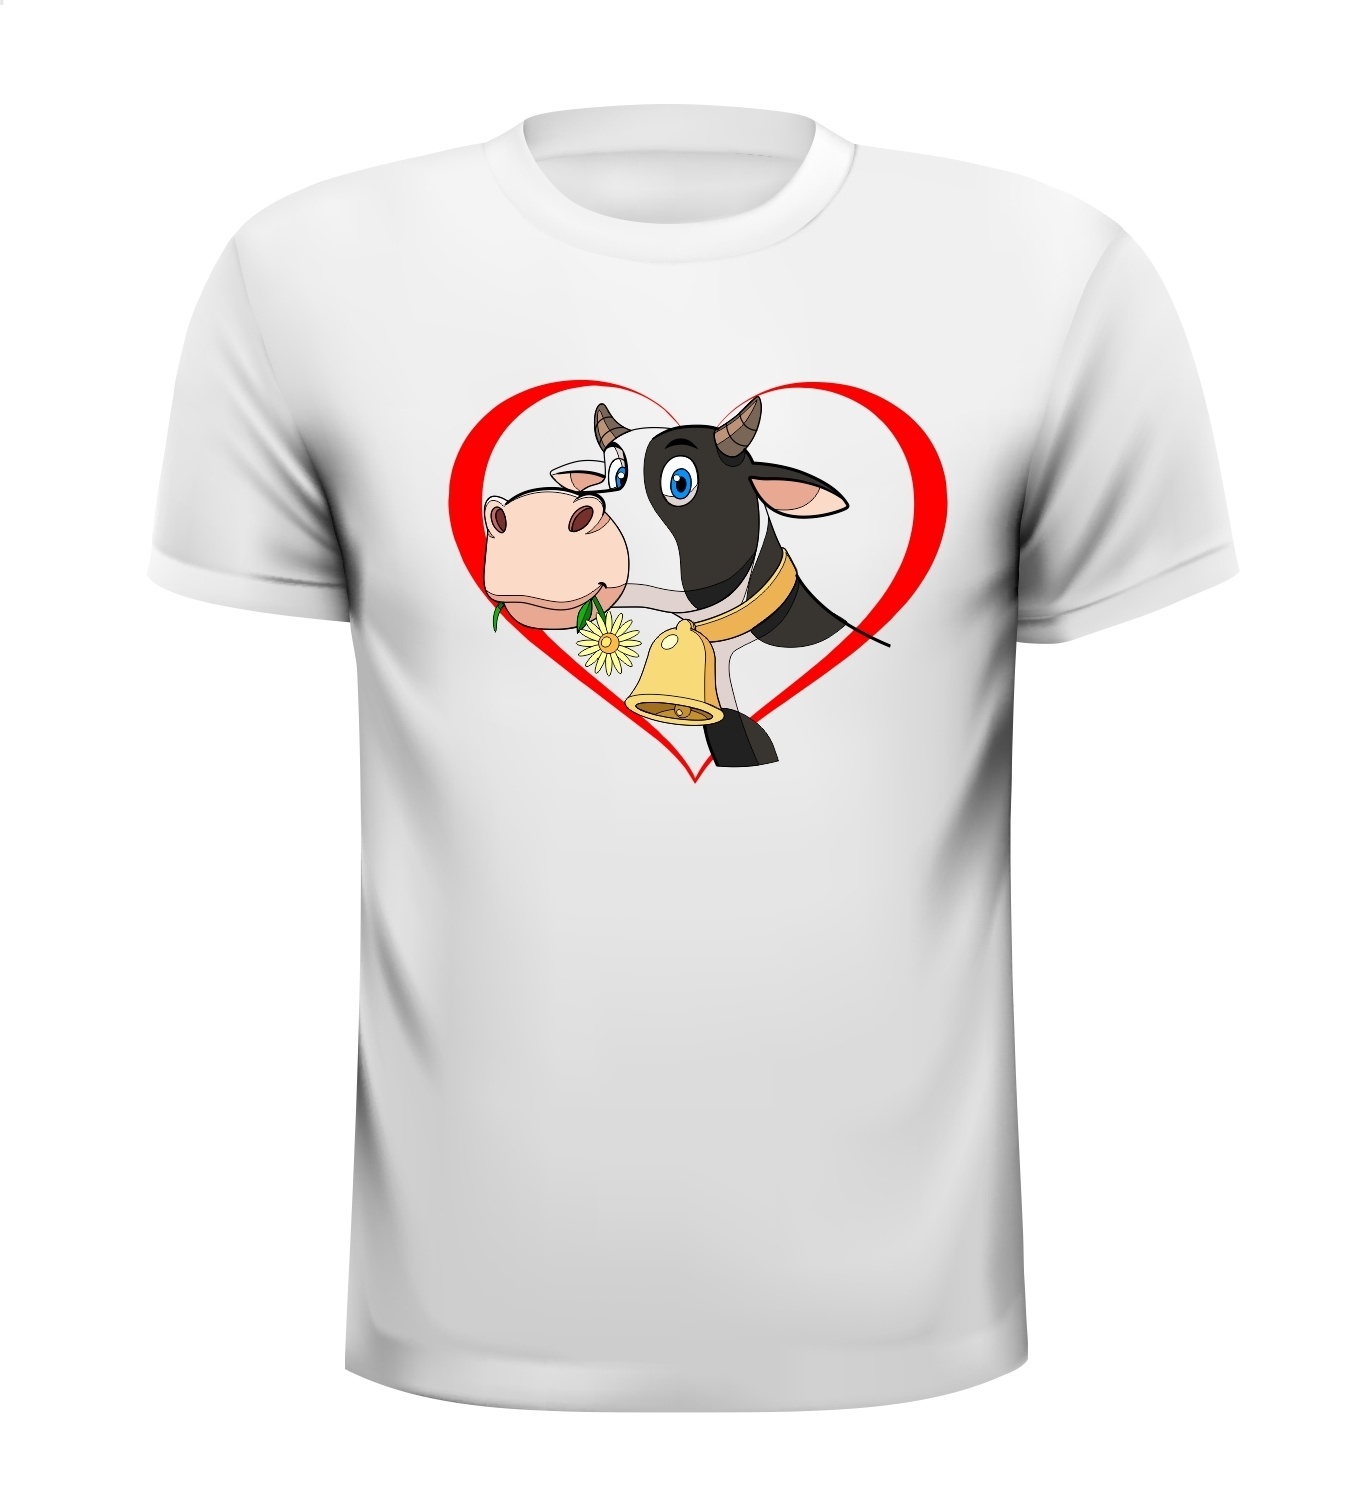 hou van koeien shirt liefde rood hart